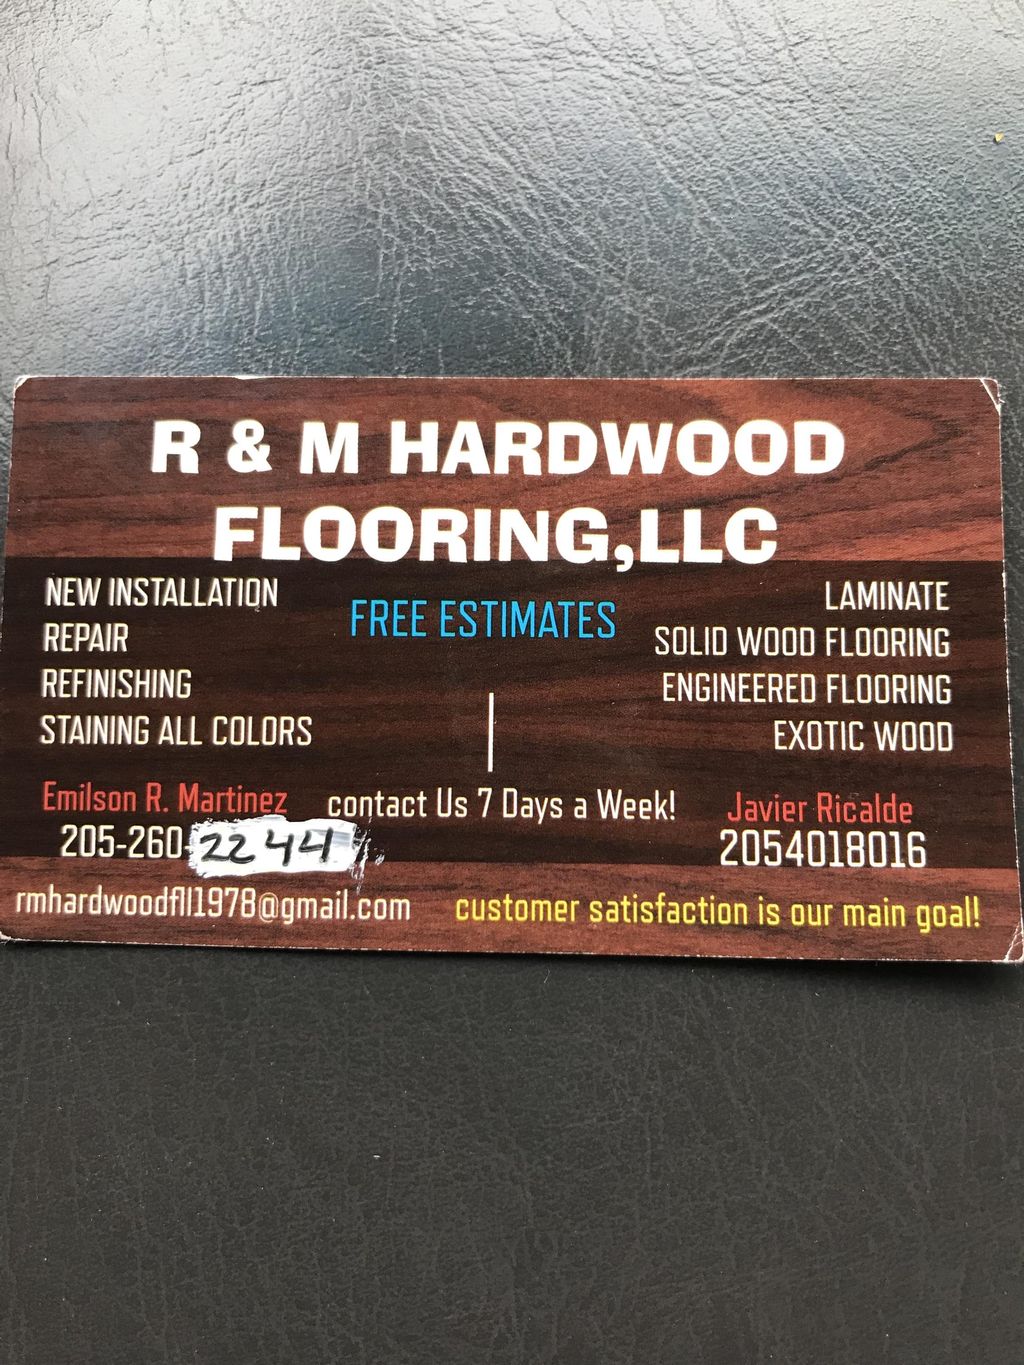 R&M HARDWOOD FLOORING,LLC